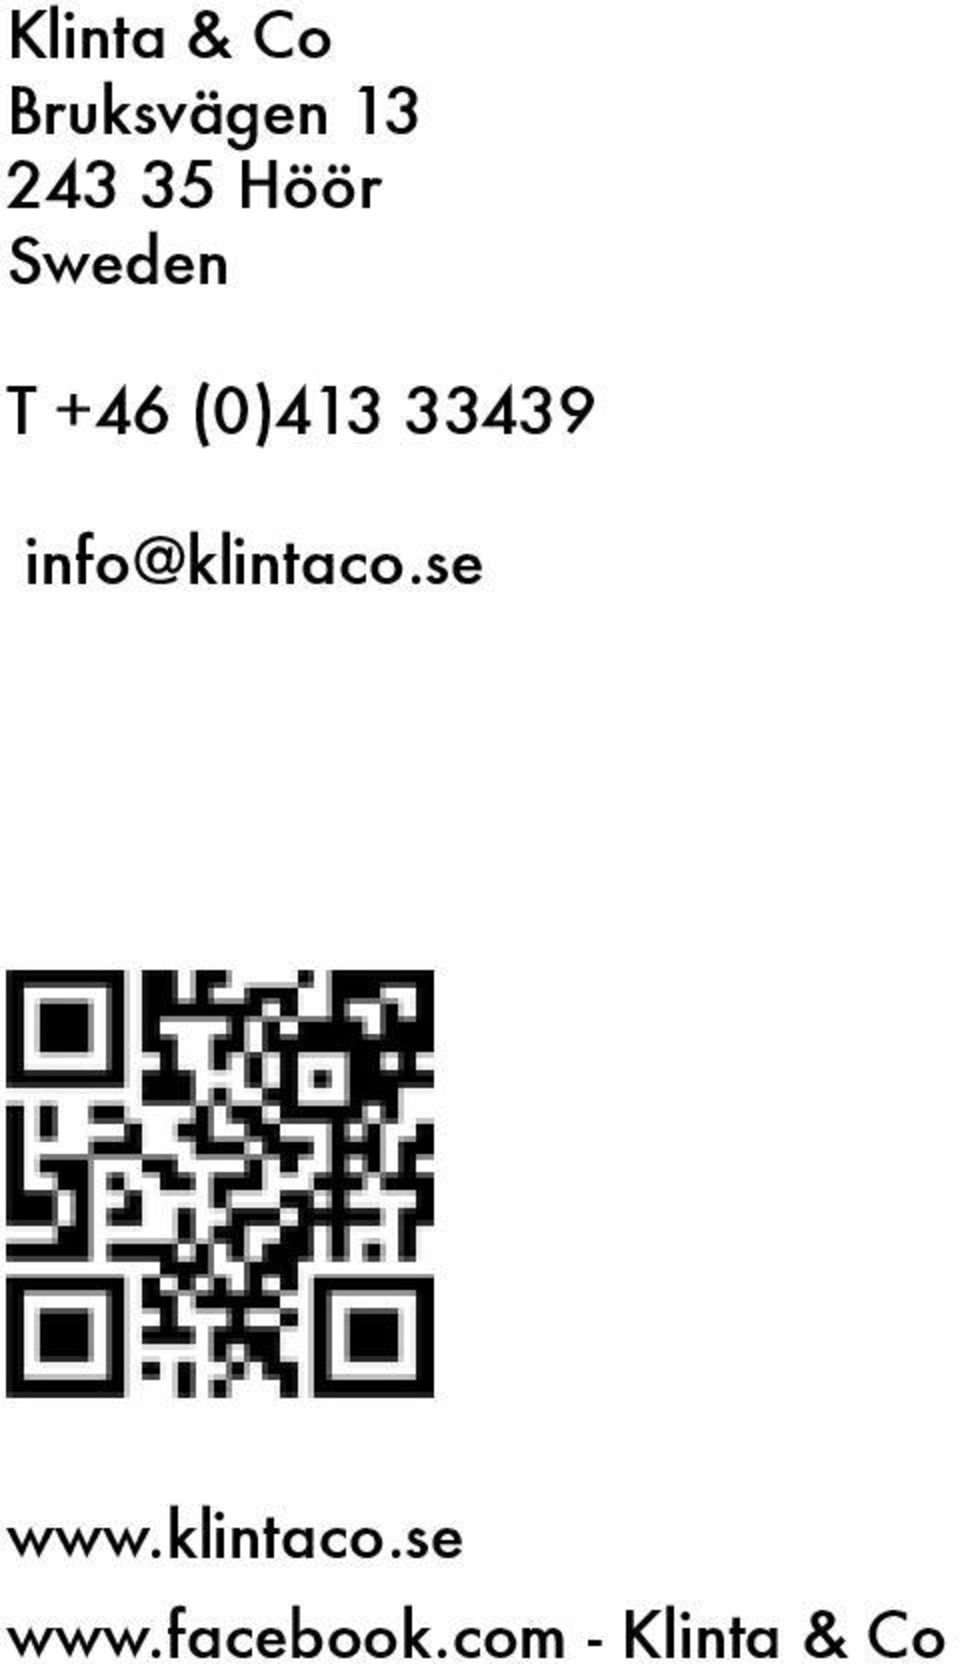 33439 info@klintaco.se www.